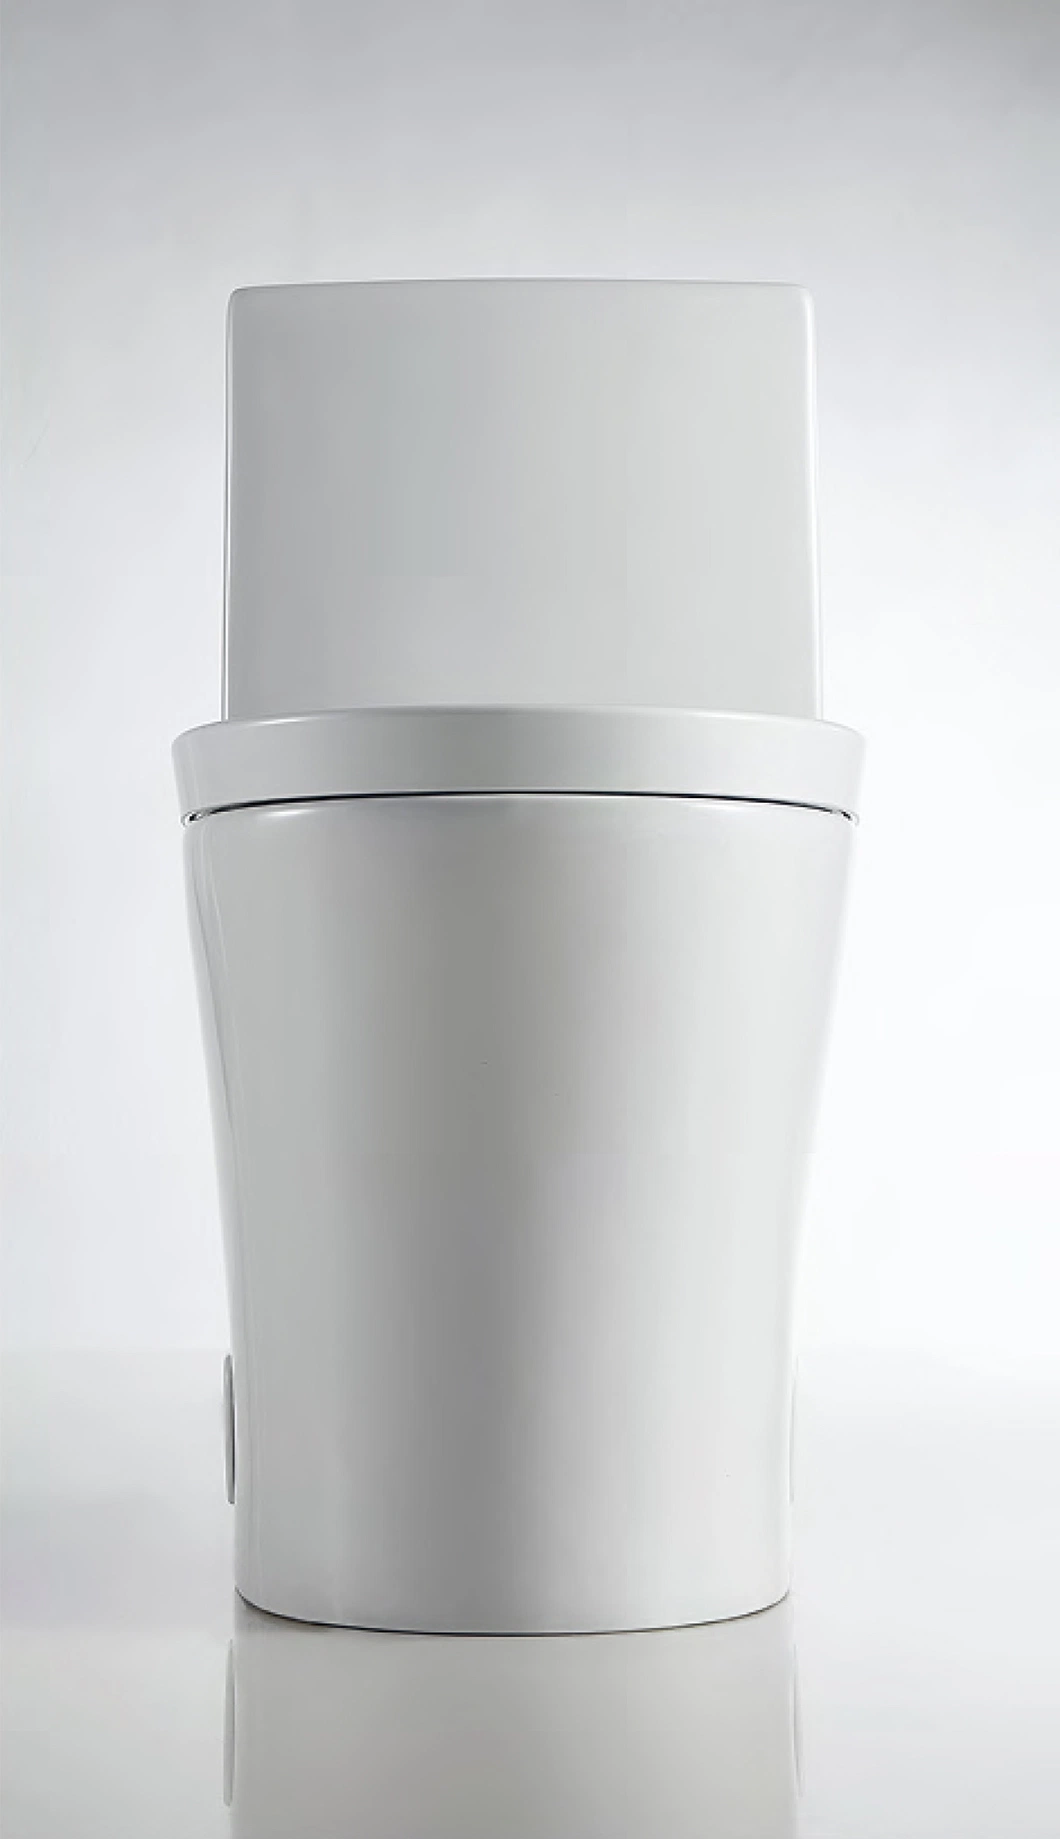 Superior-Quality Superior Flushing Dual Popular Model Hot Sale Product Siphonic Flush Ceramic Sanitary